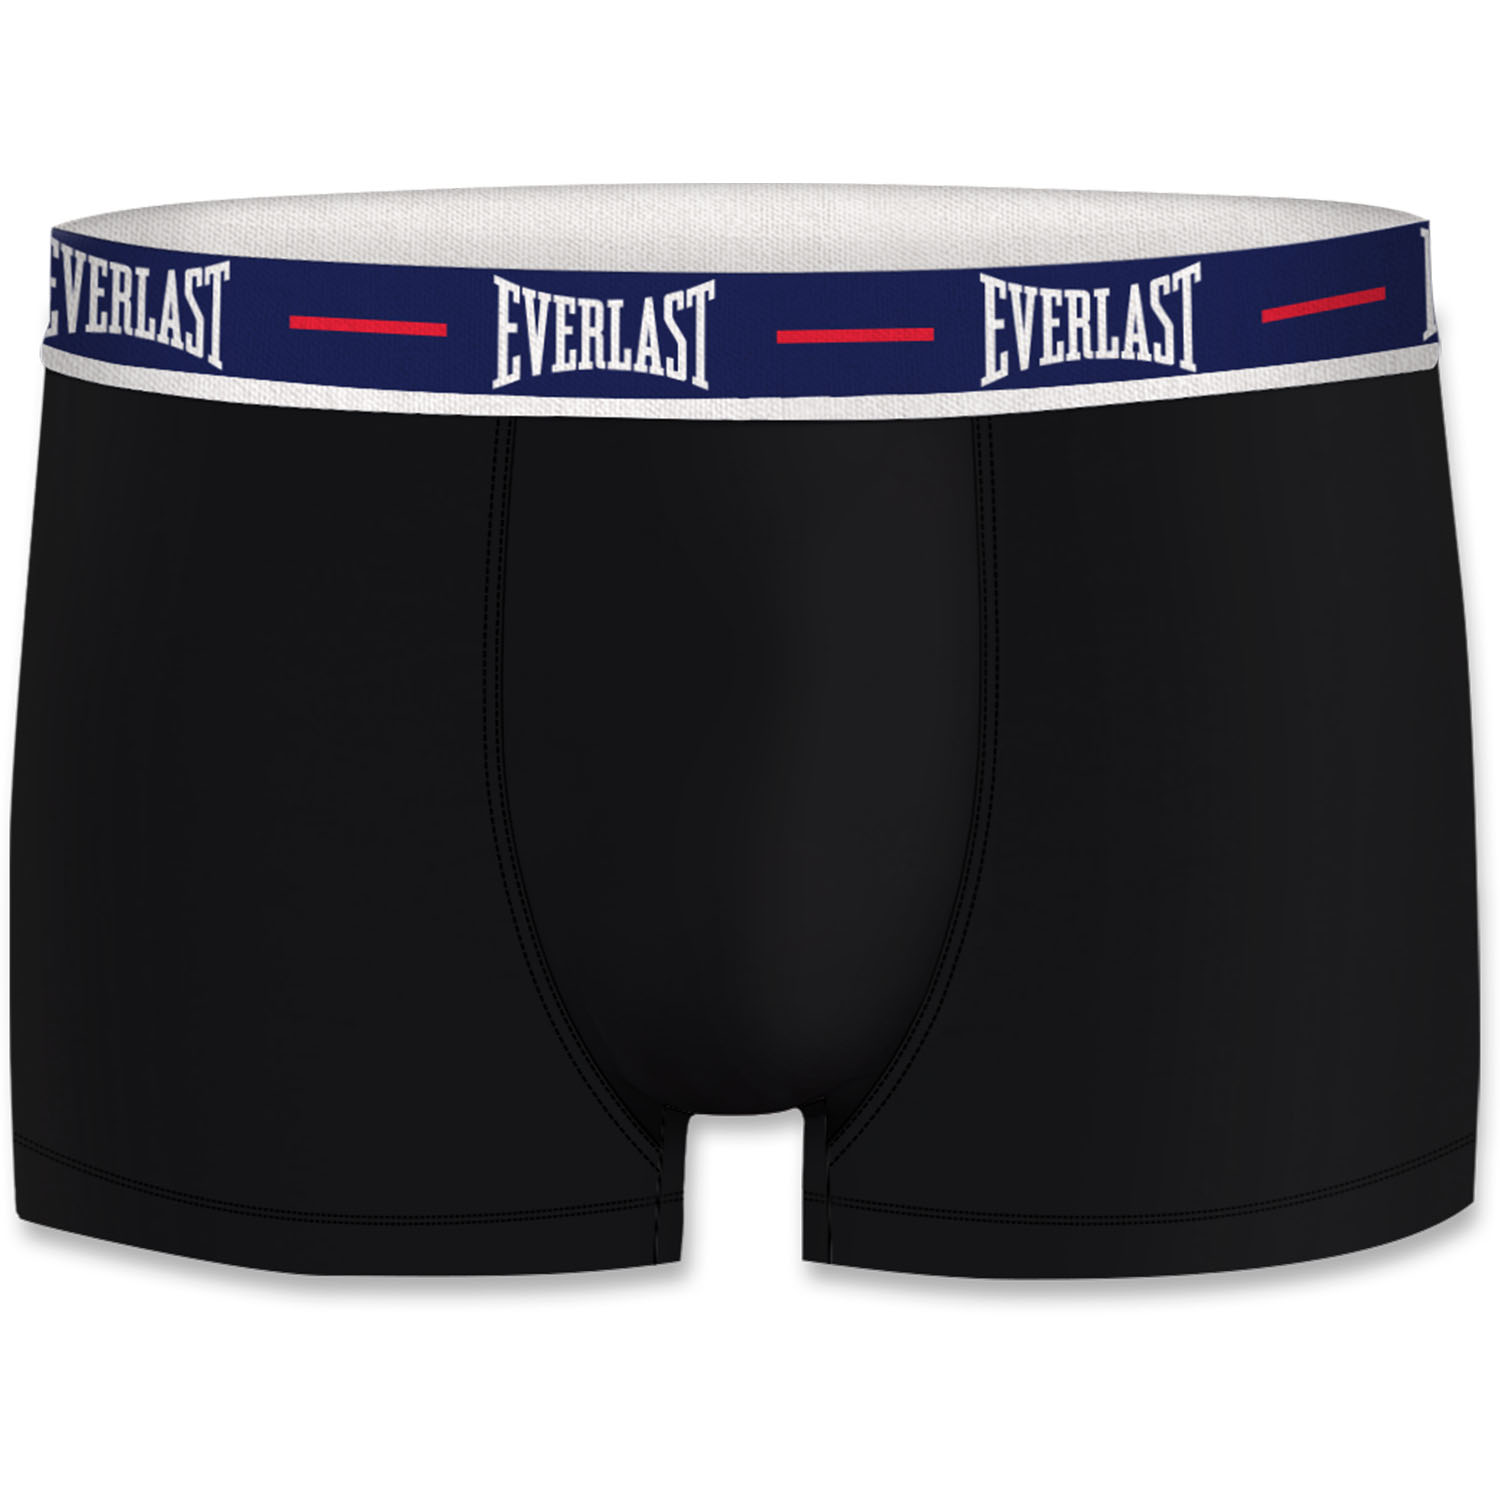 Everlast Boxershorts, AS1, black